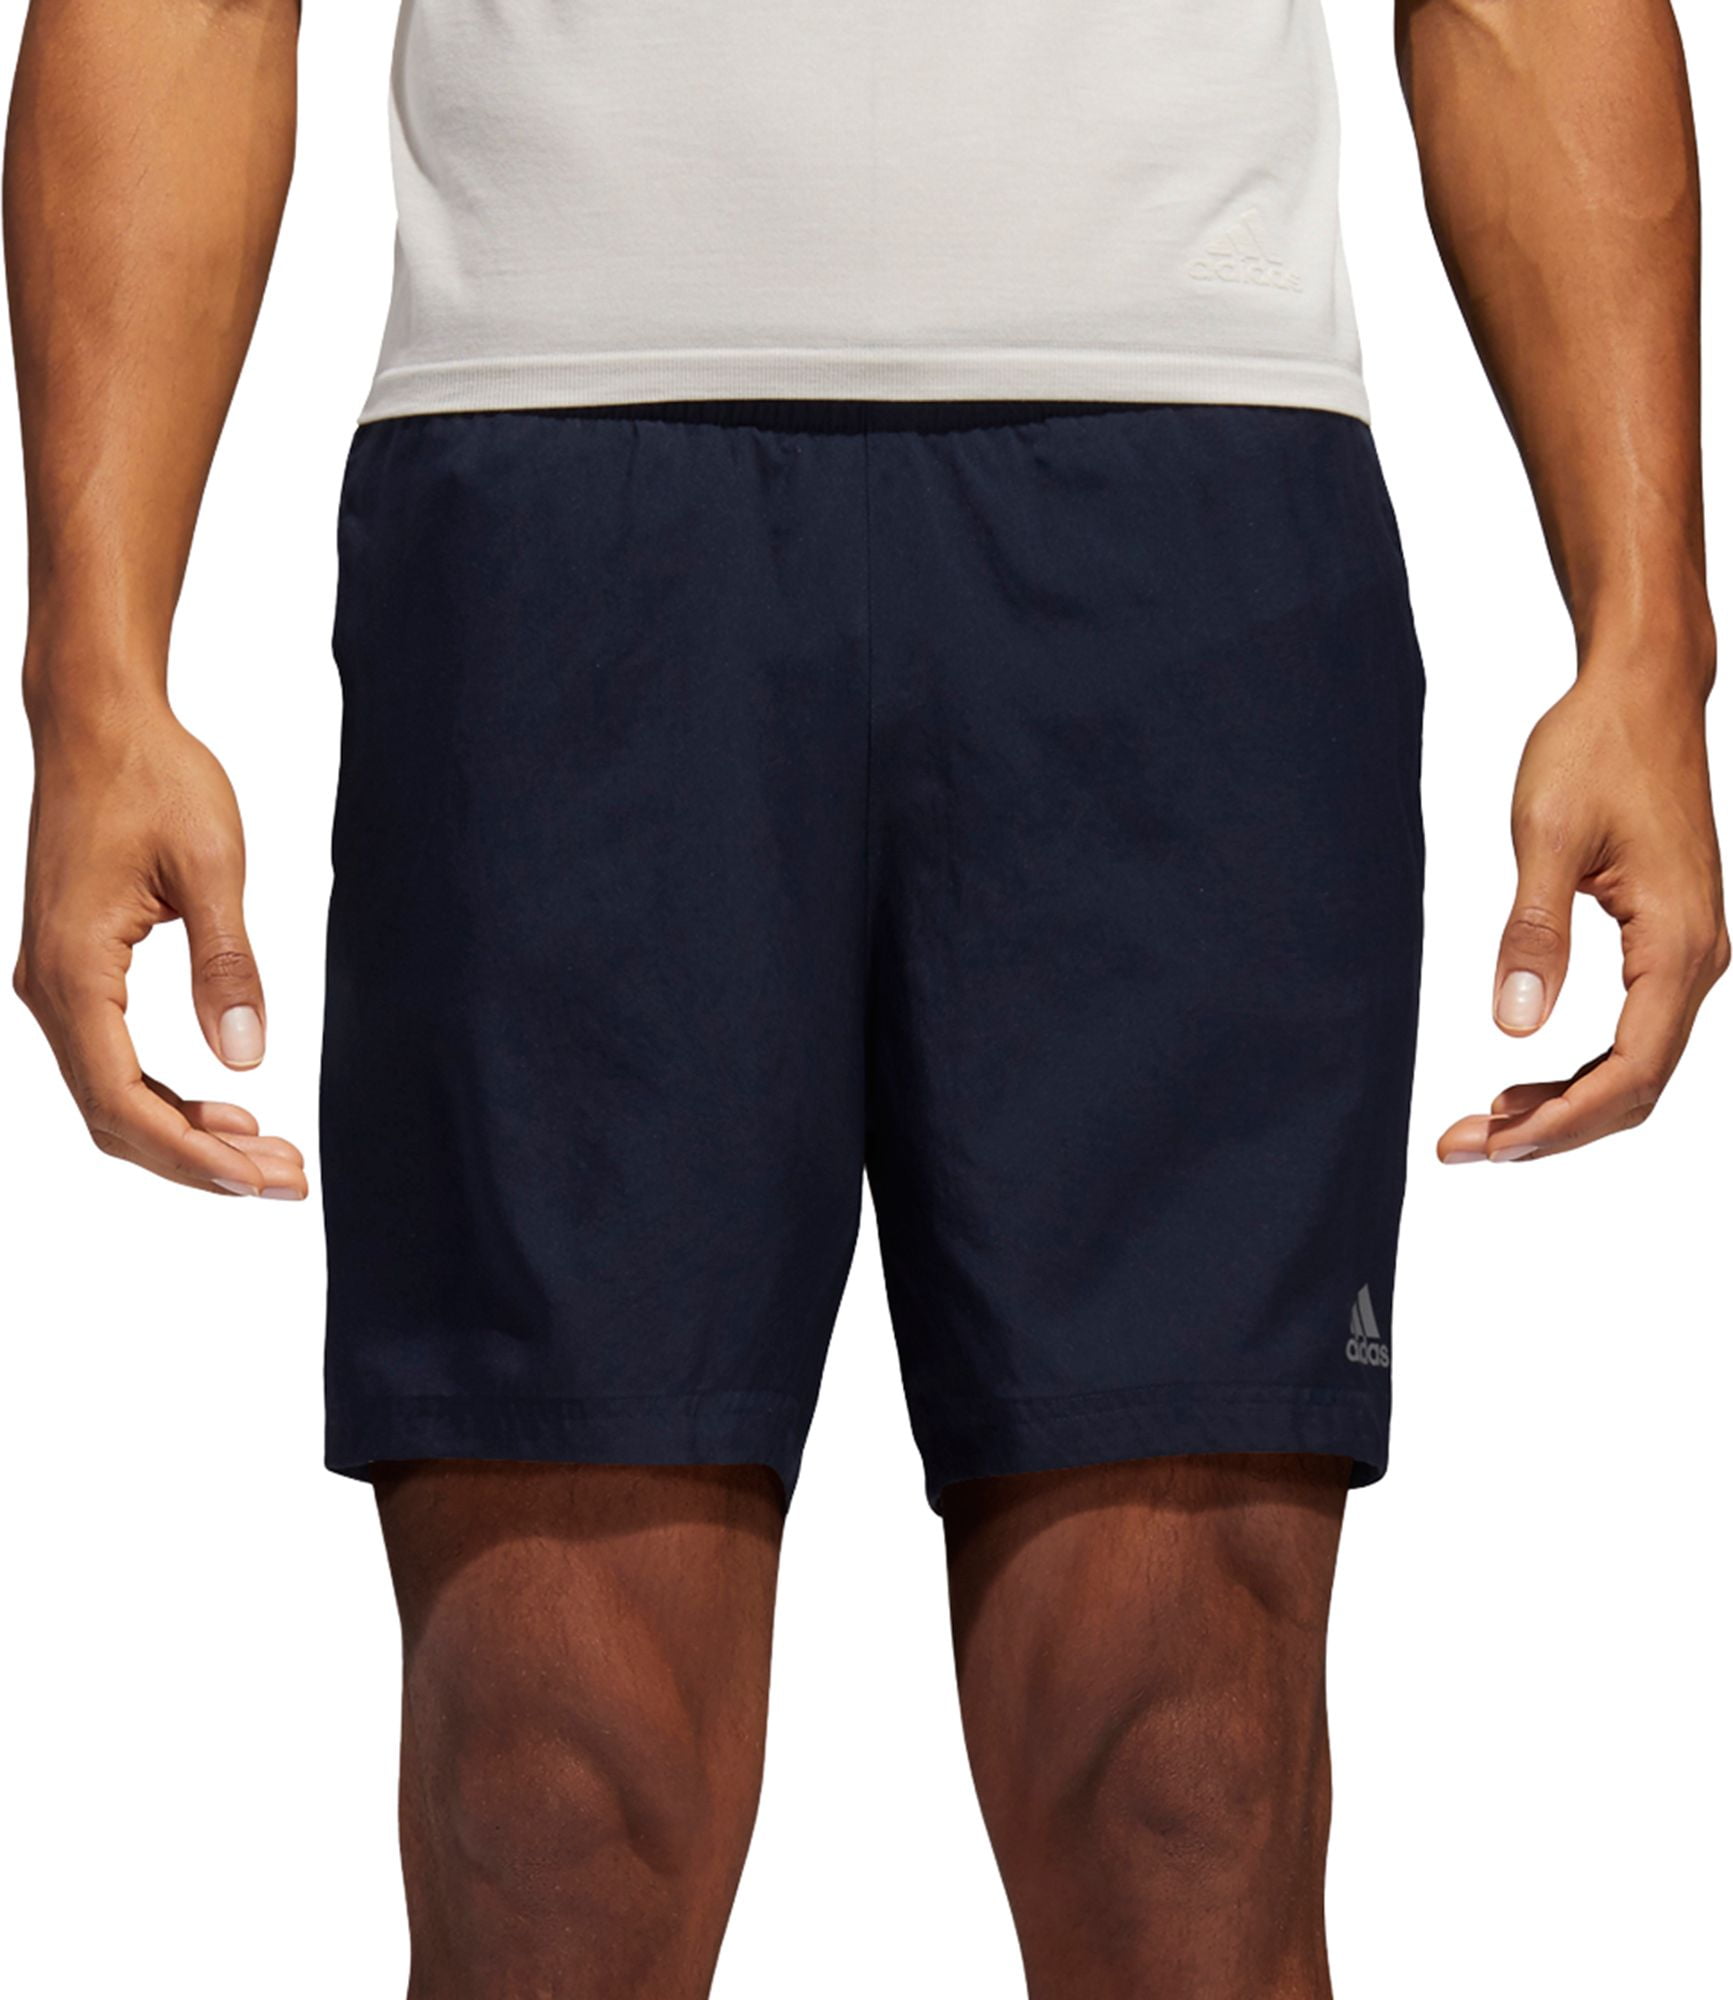 adidas lined running shorts